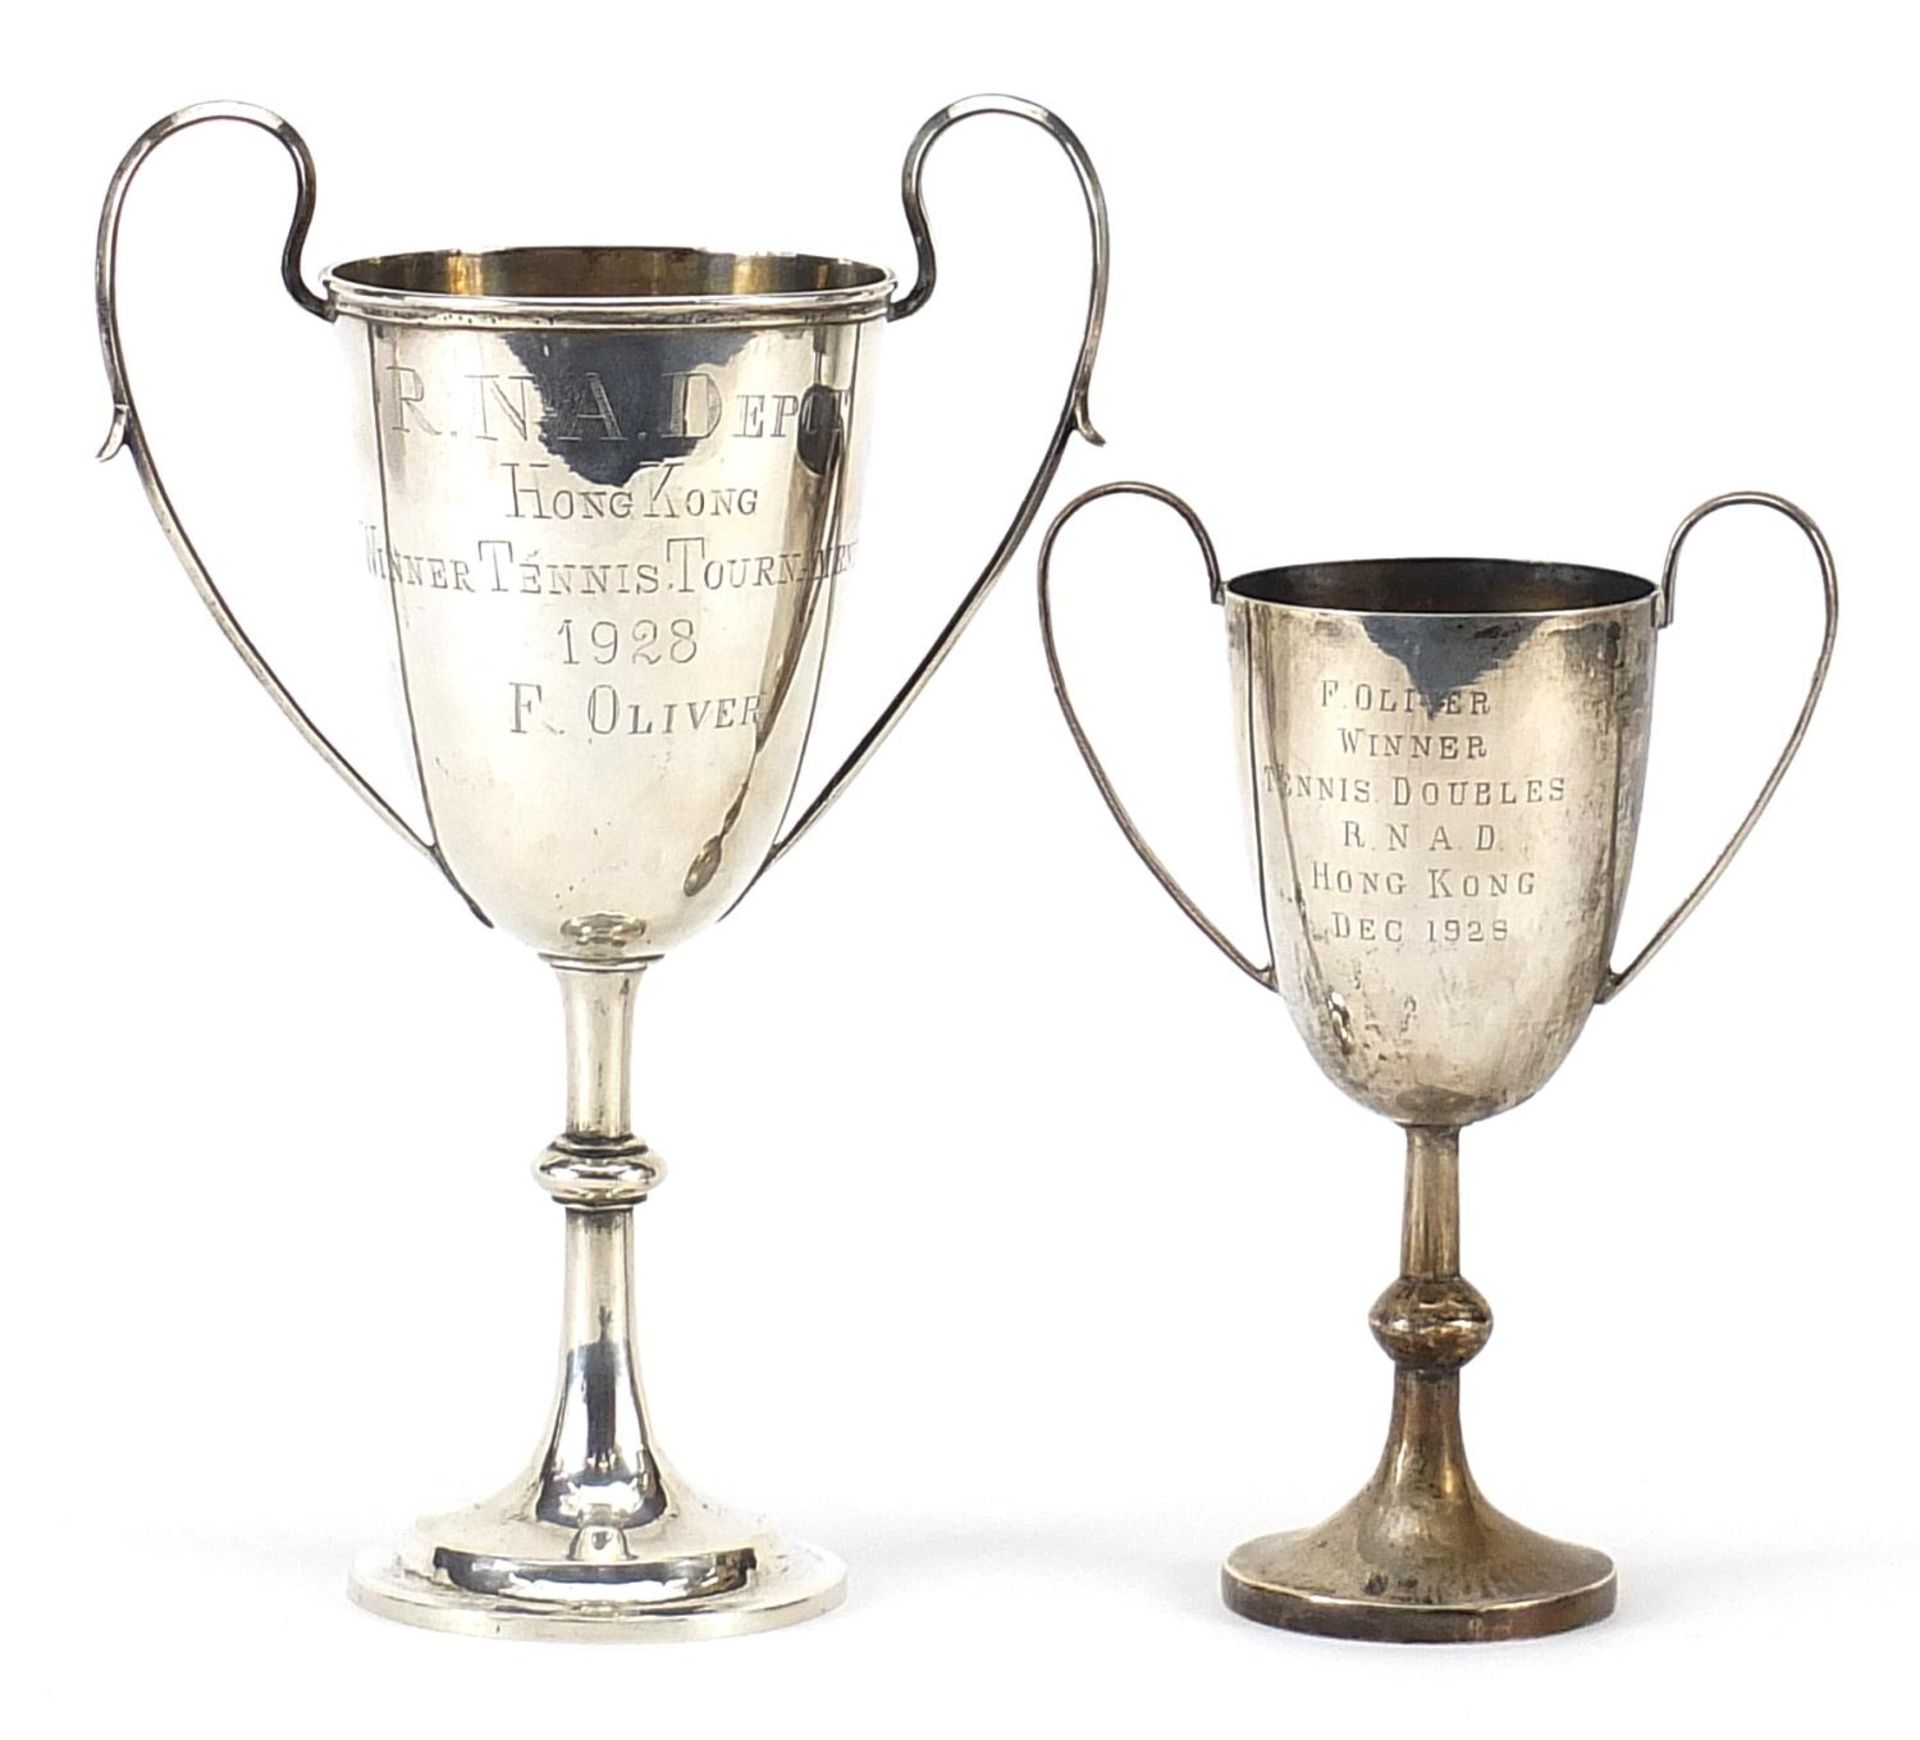 Two Chinese silver tennis trophies engraved RNA Depot Hong Kong Winner Tennis Tournament 1928 F